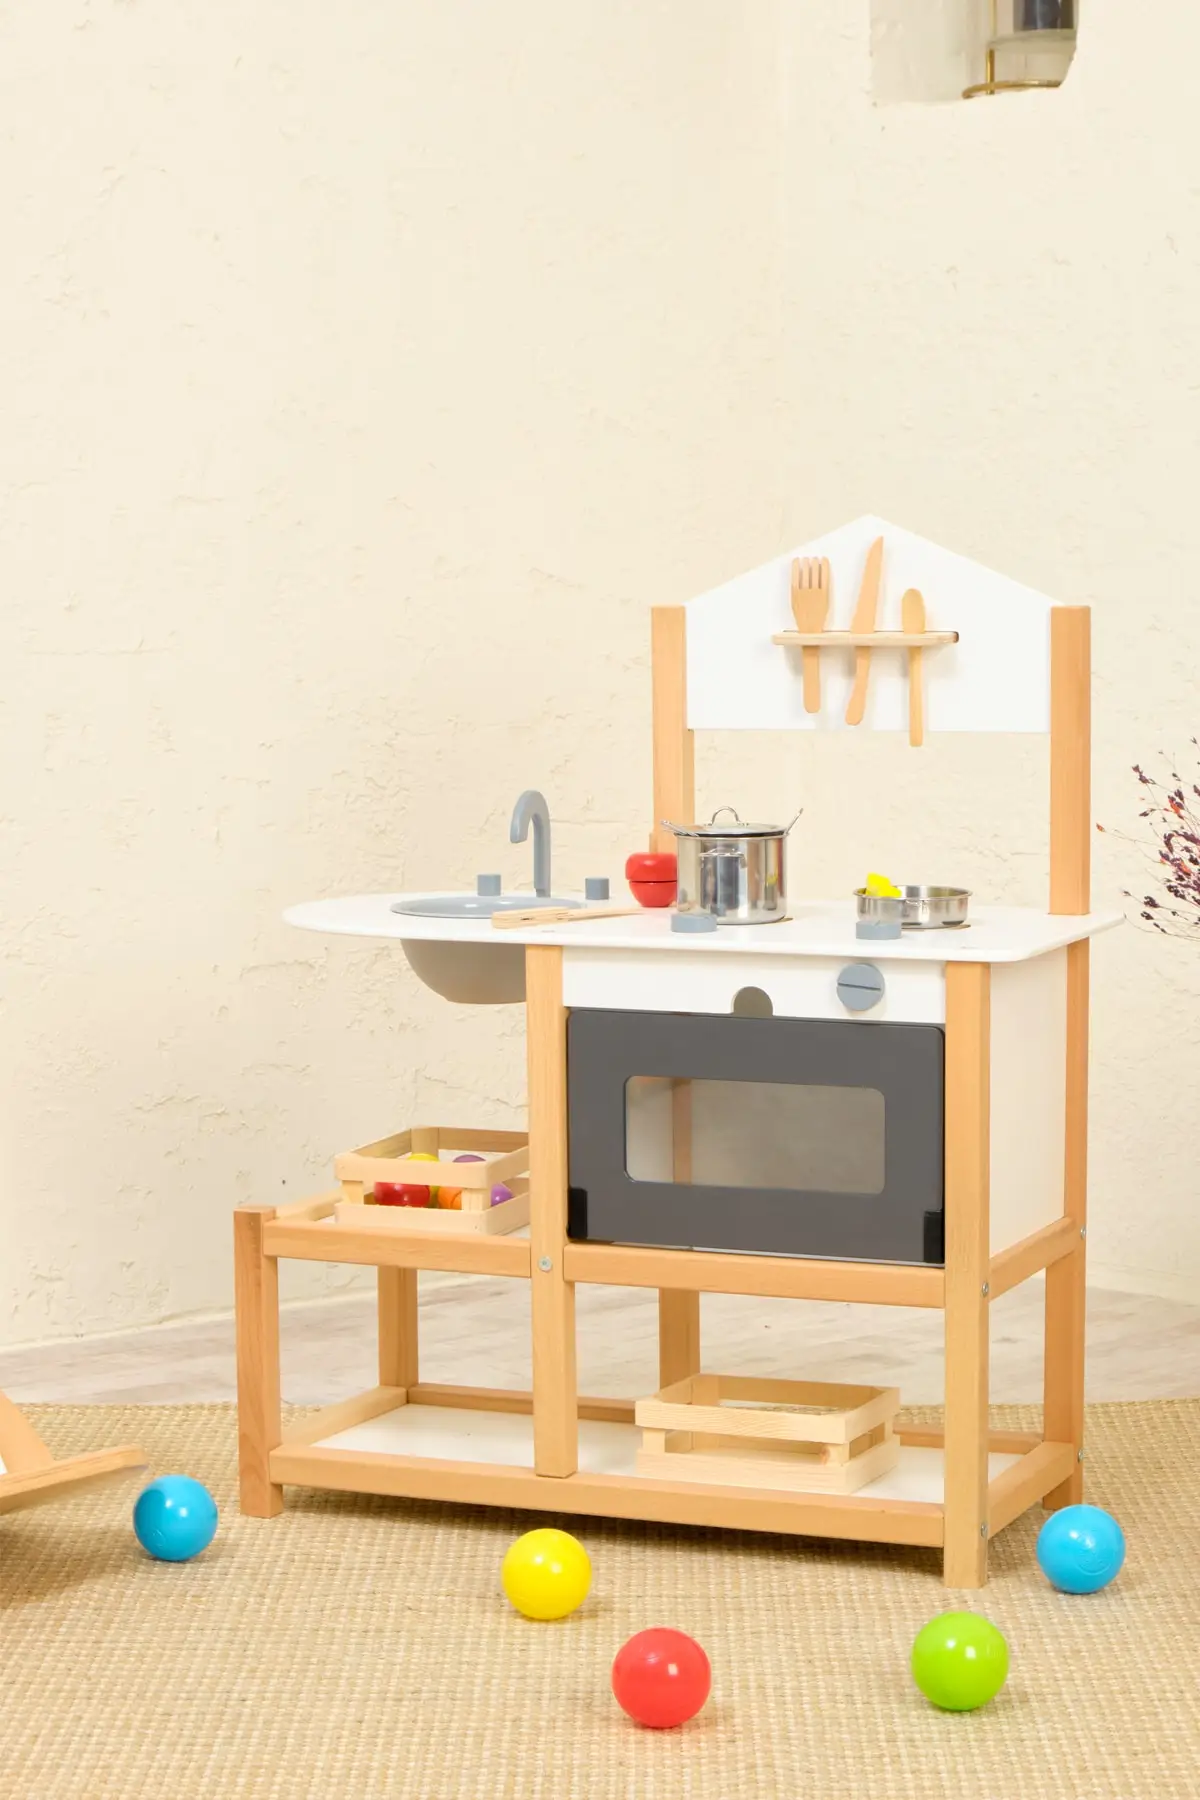 https://ae01.alicdn.com/kf/Se57708fba8724a3c9a4c1cc31831dec6E/Wooden-Educational-Toy-Kitchen-Montessori-Gamba-Kitchen-Set.jpg